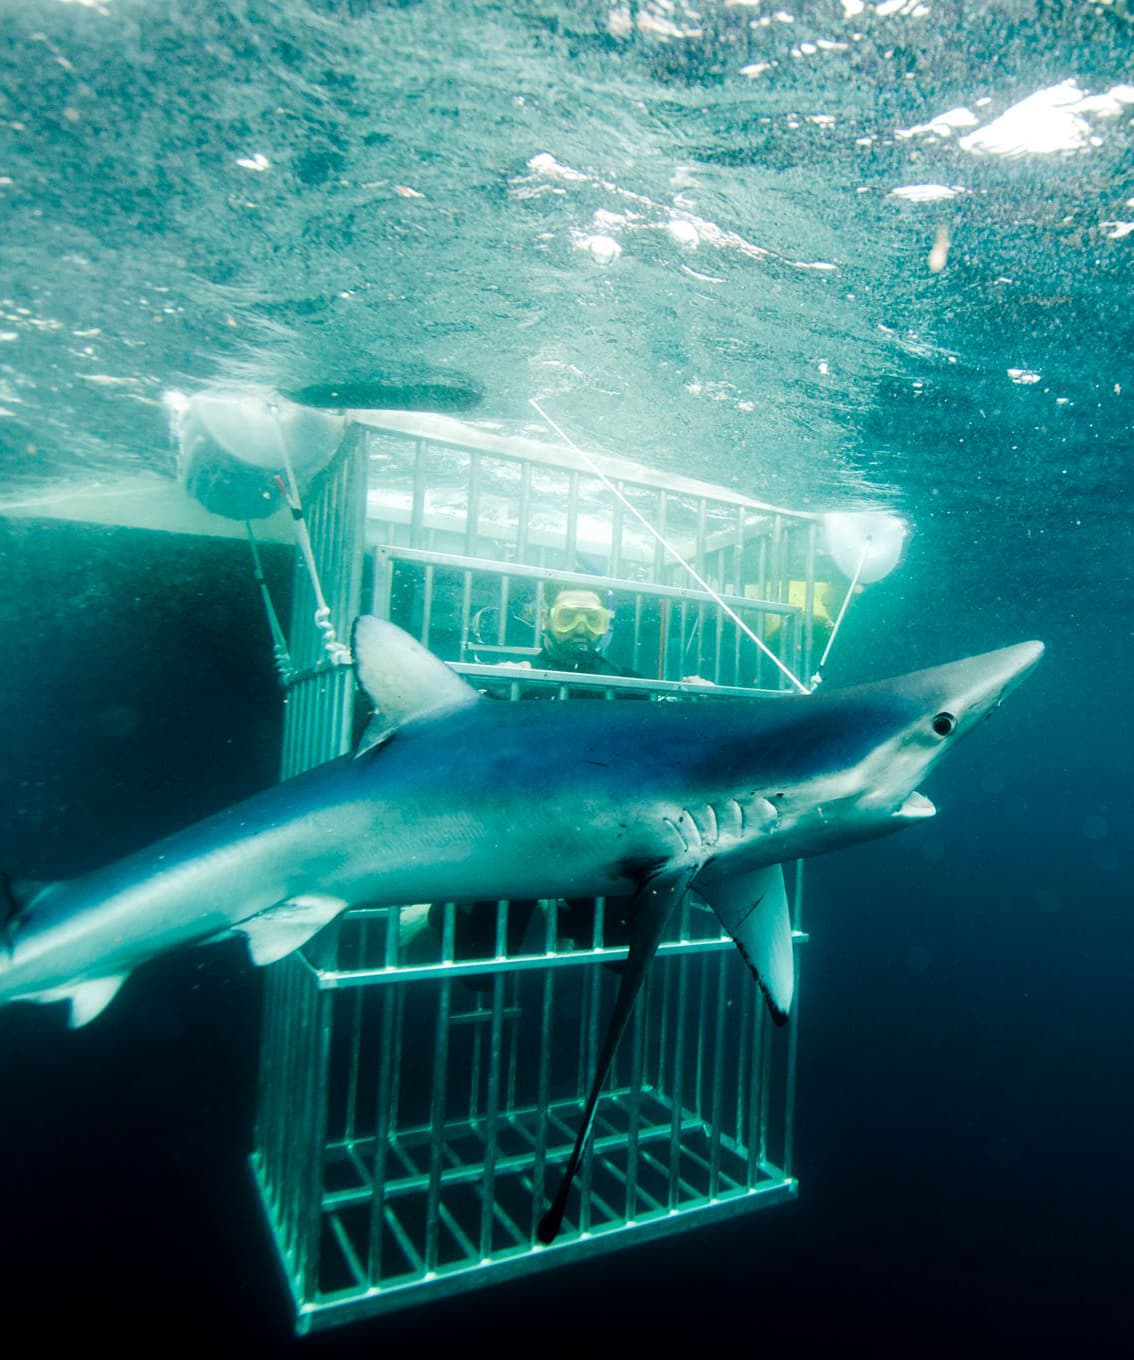 An image of a california shark diving participant in a shark cage with california sharks